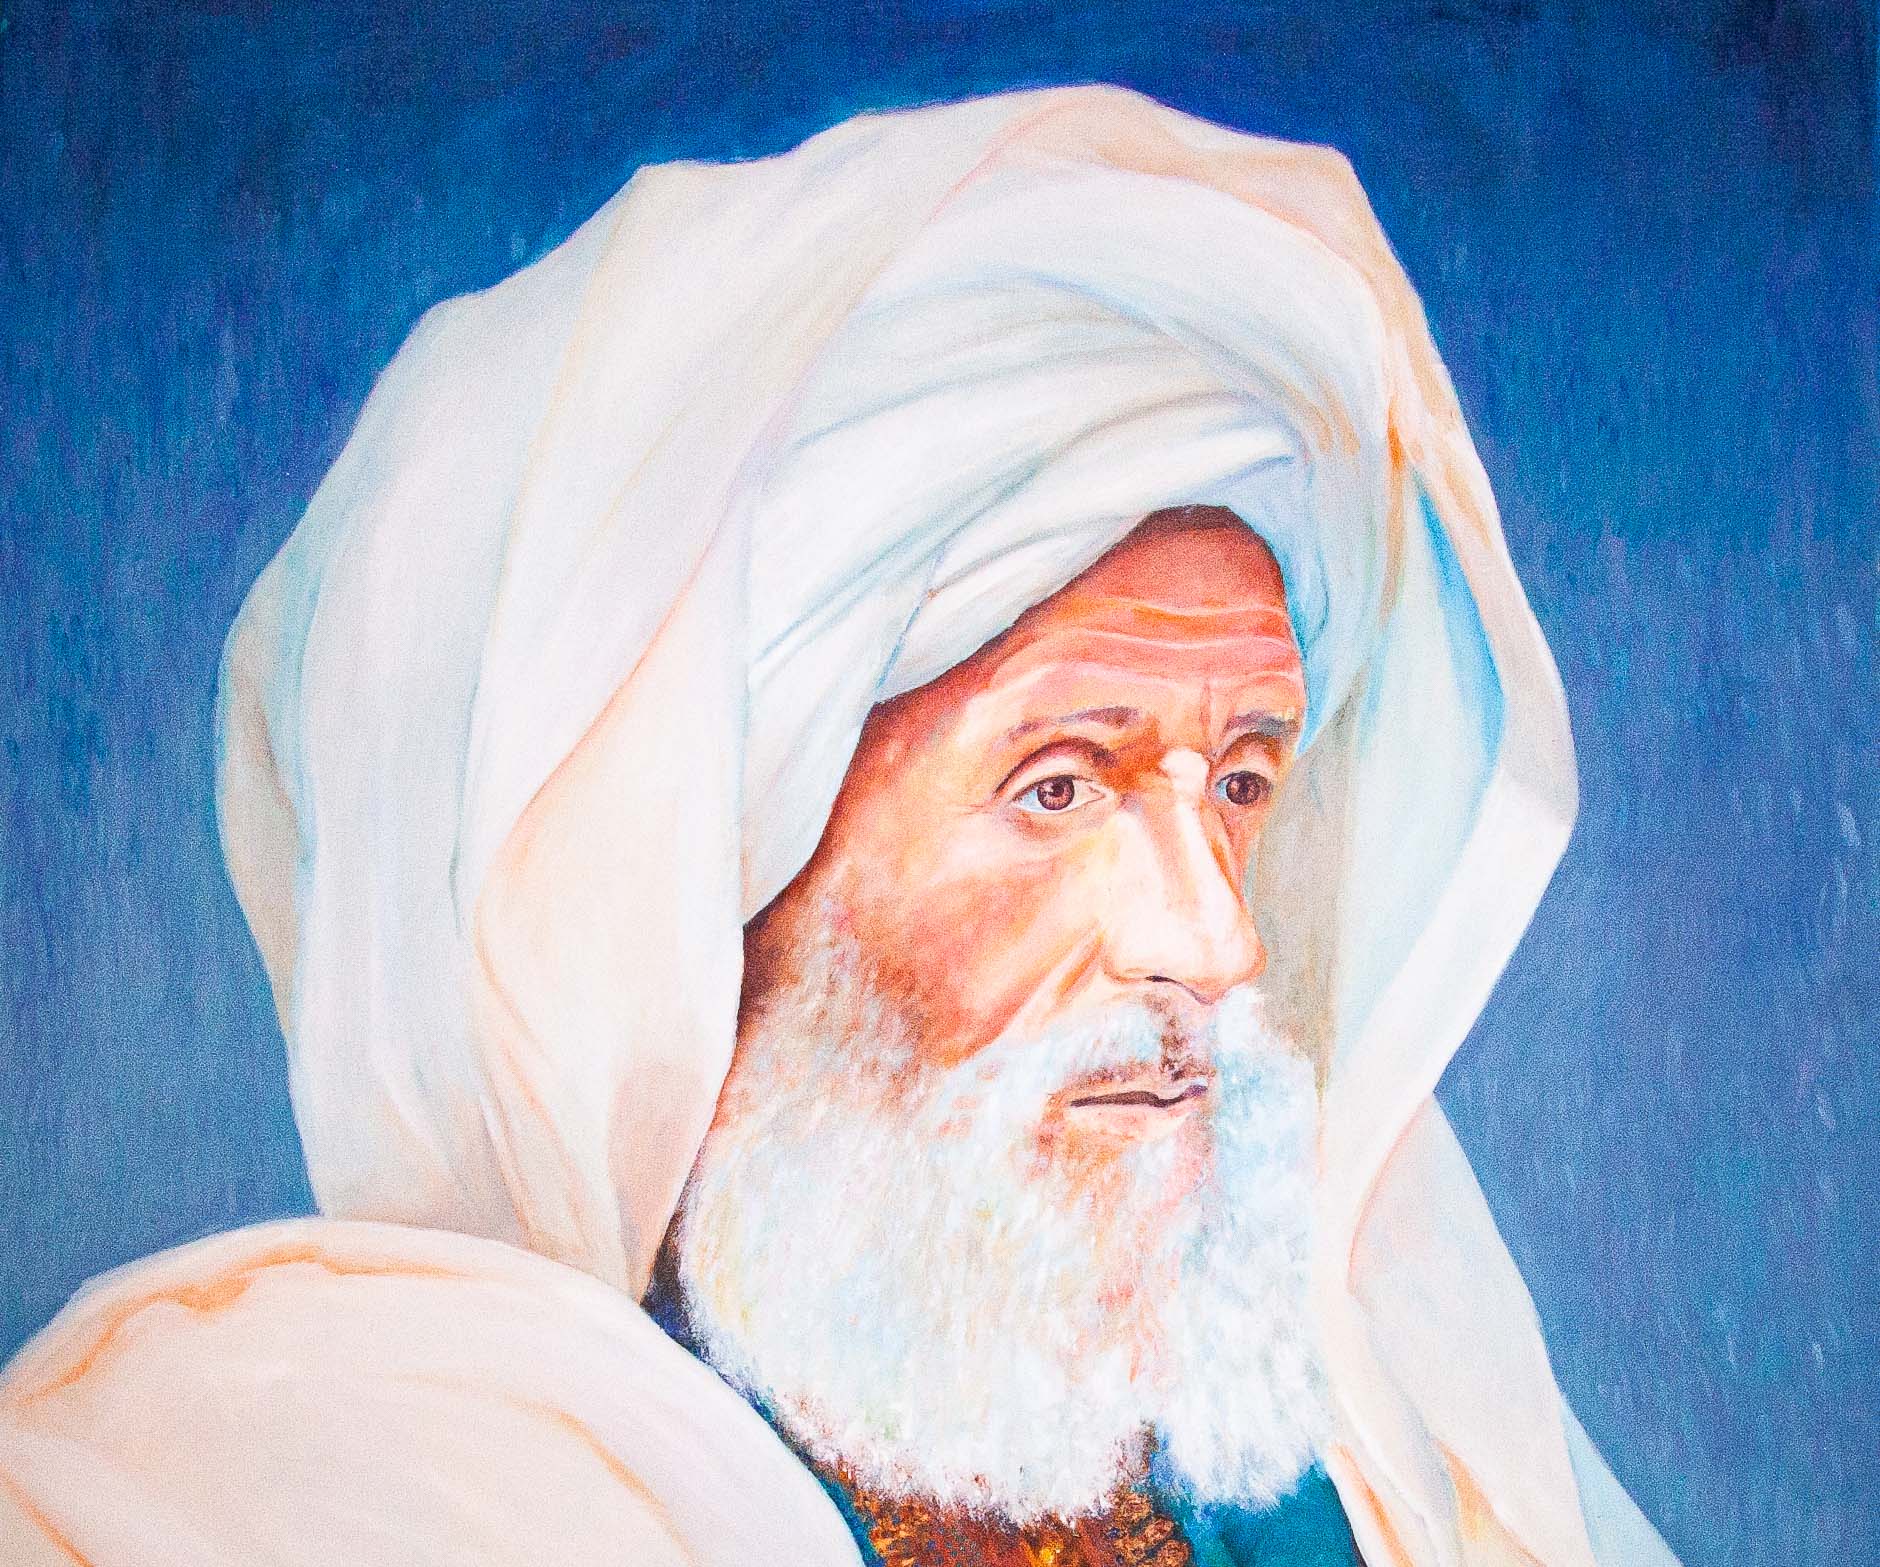 Cheikh zaouia